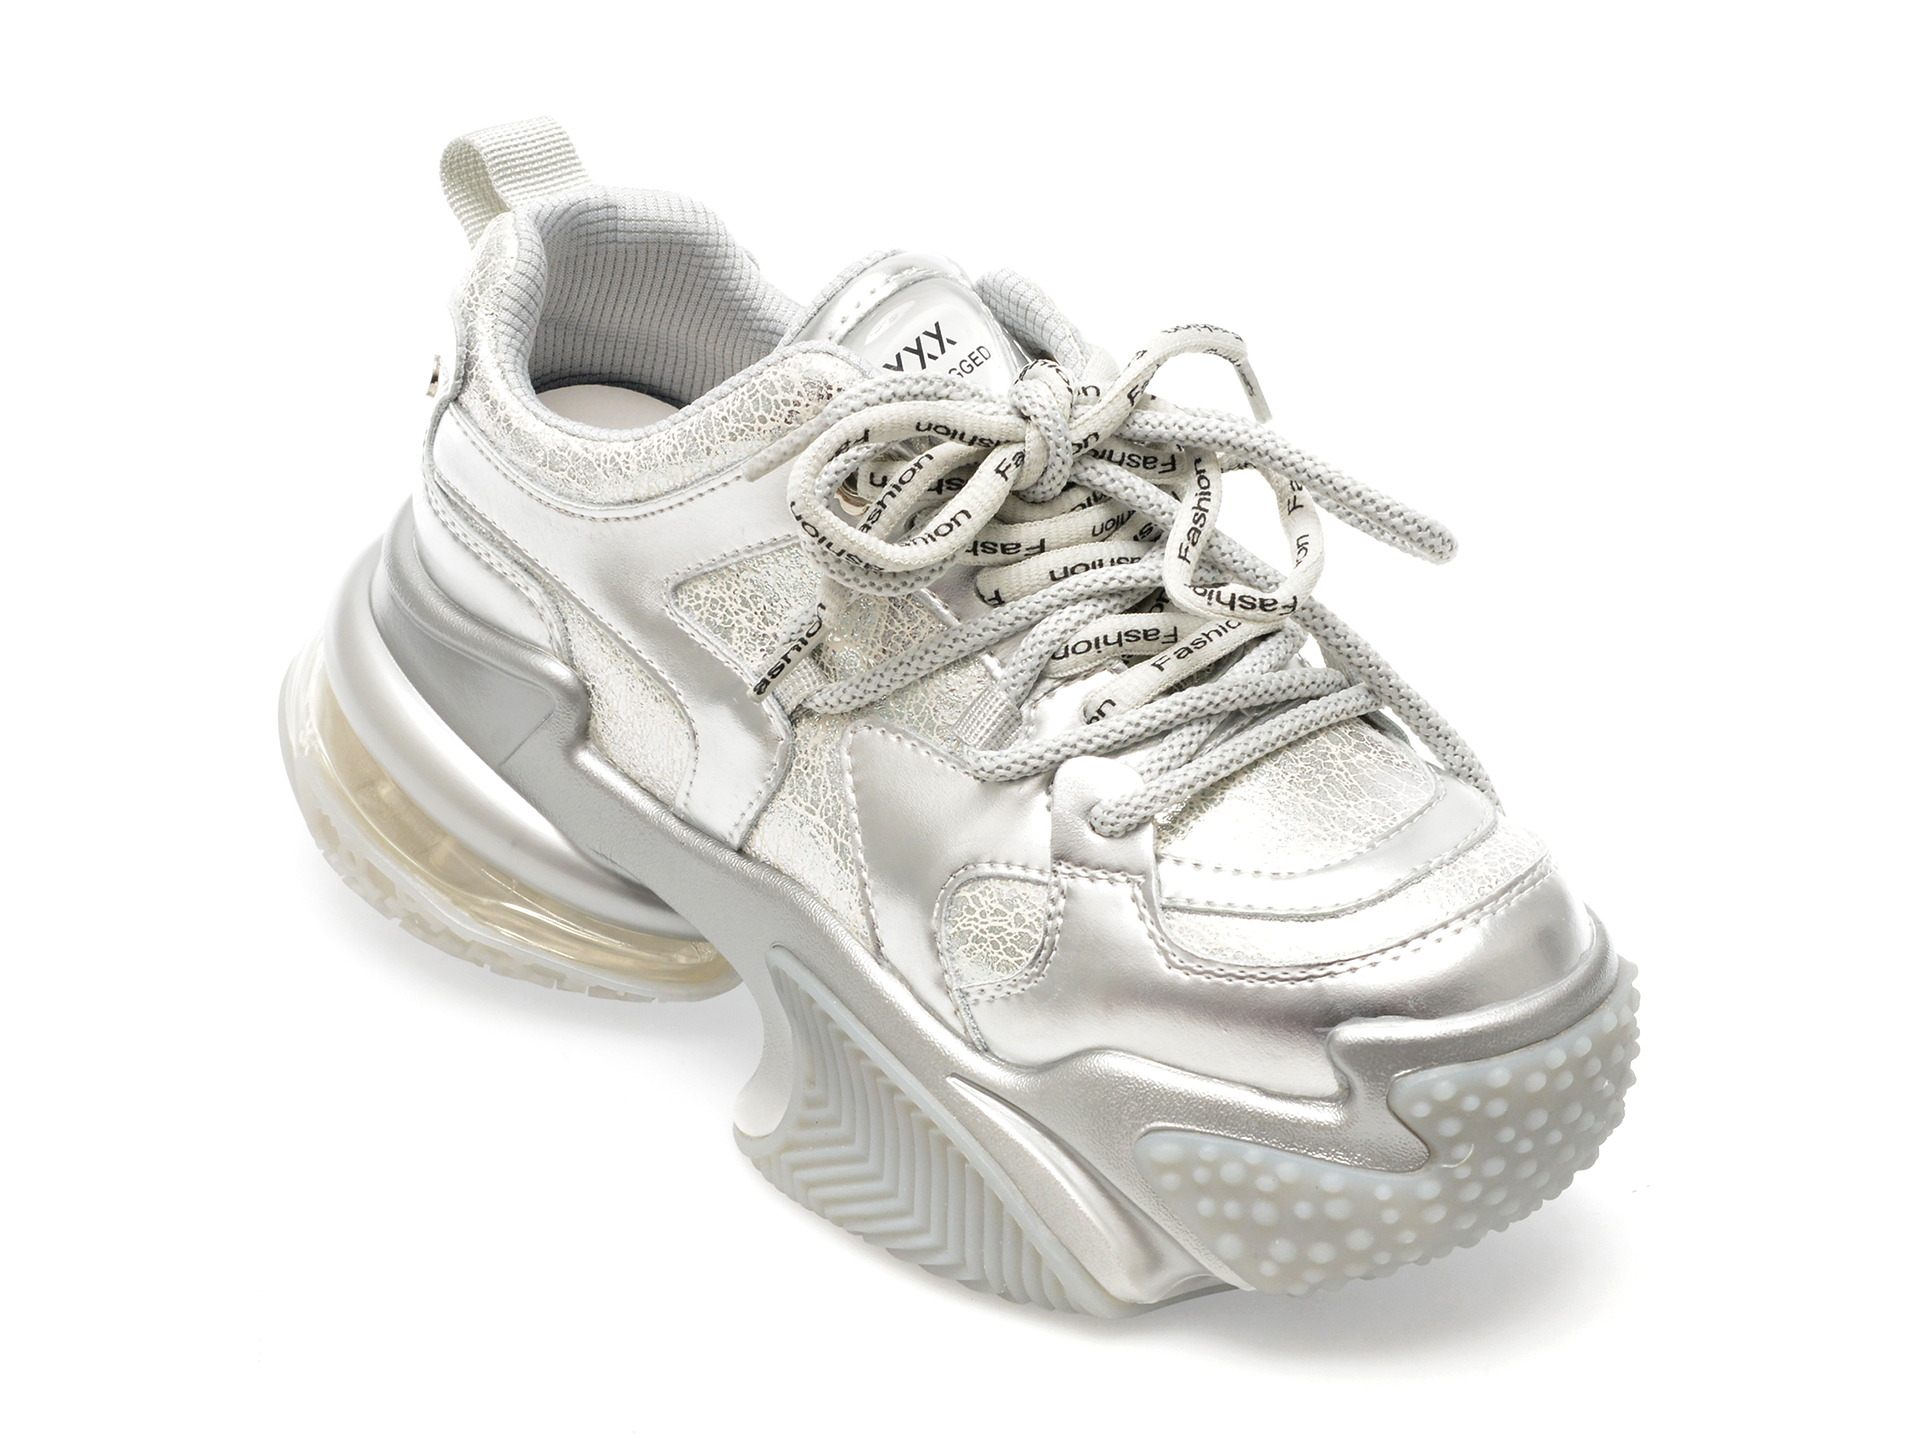 Poze Pantofi GRYXX argintii, 897, din piele naturala